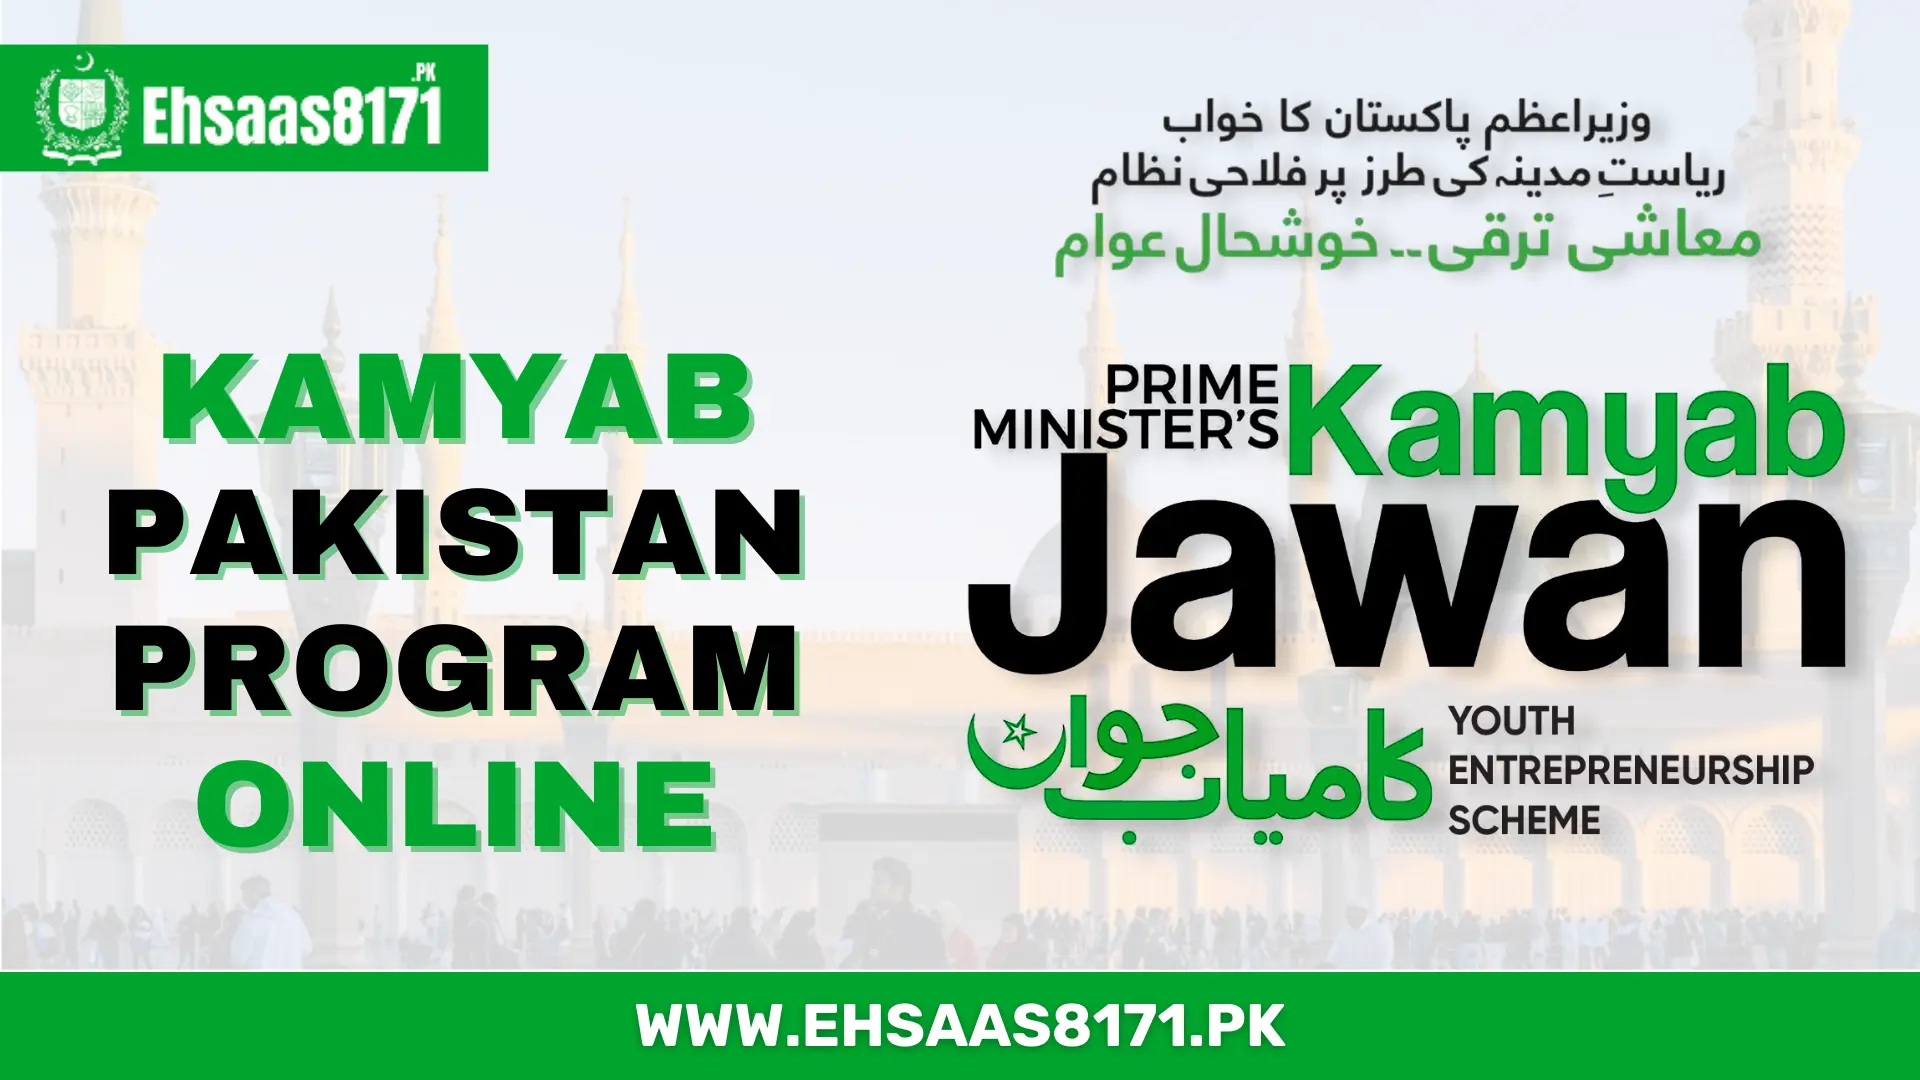 Kamyab Pakistan program online